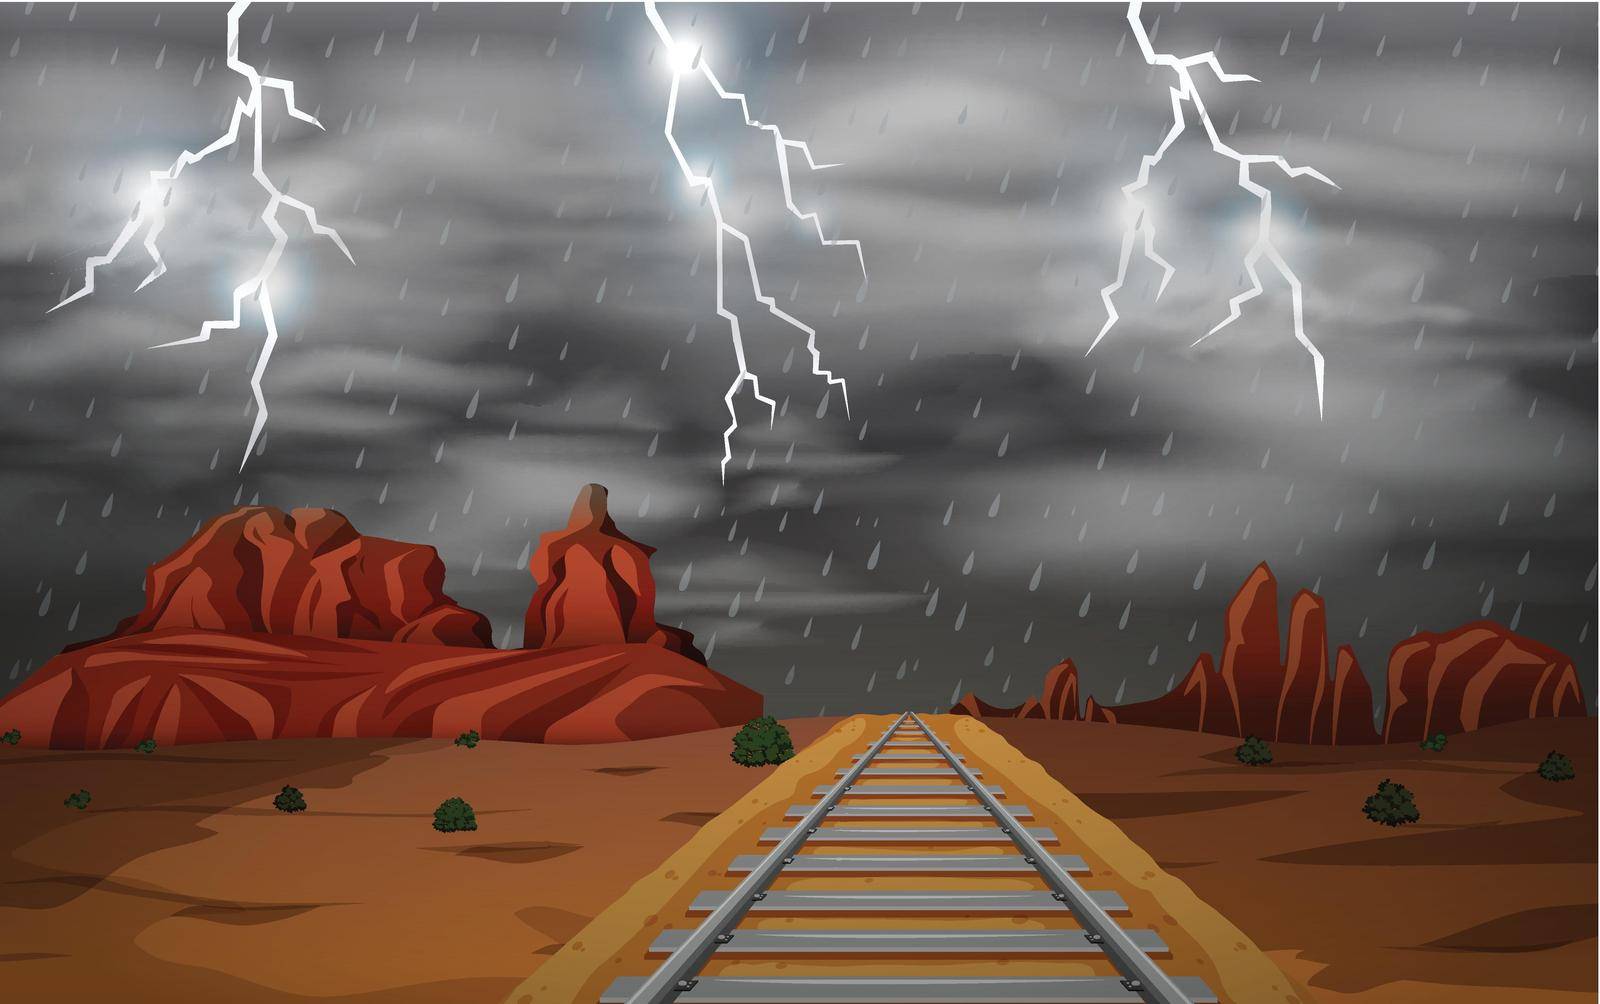 The wild west storm scene illustration